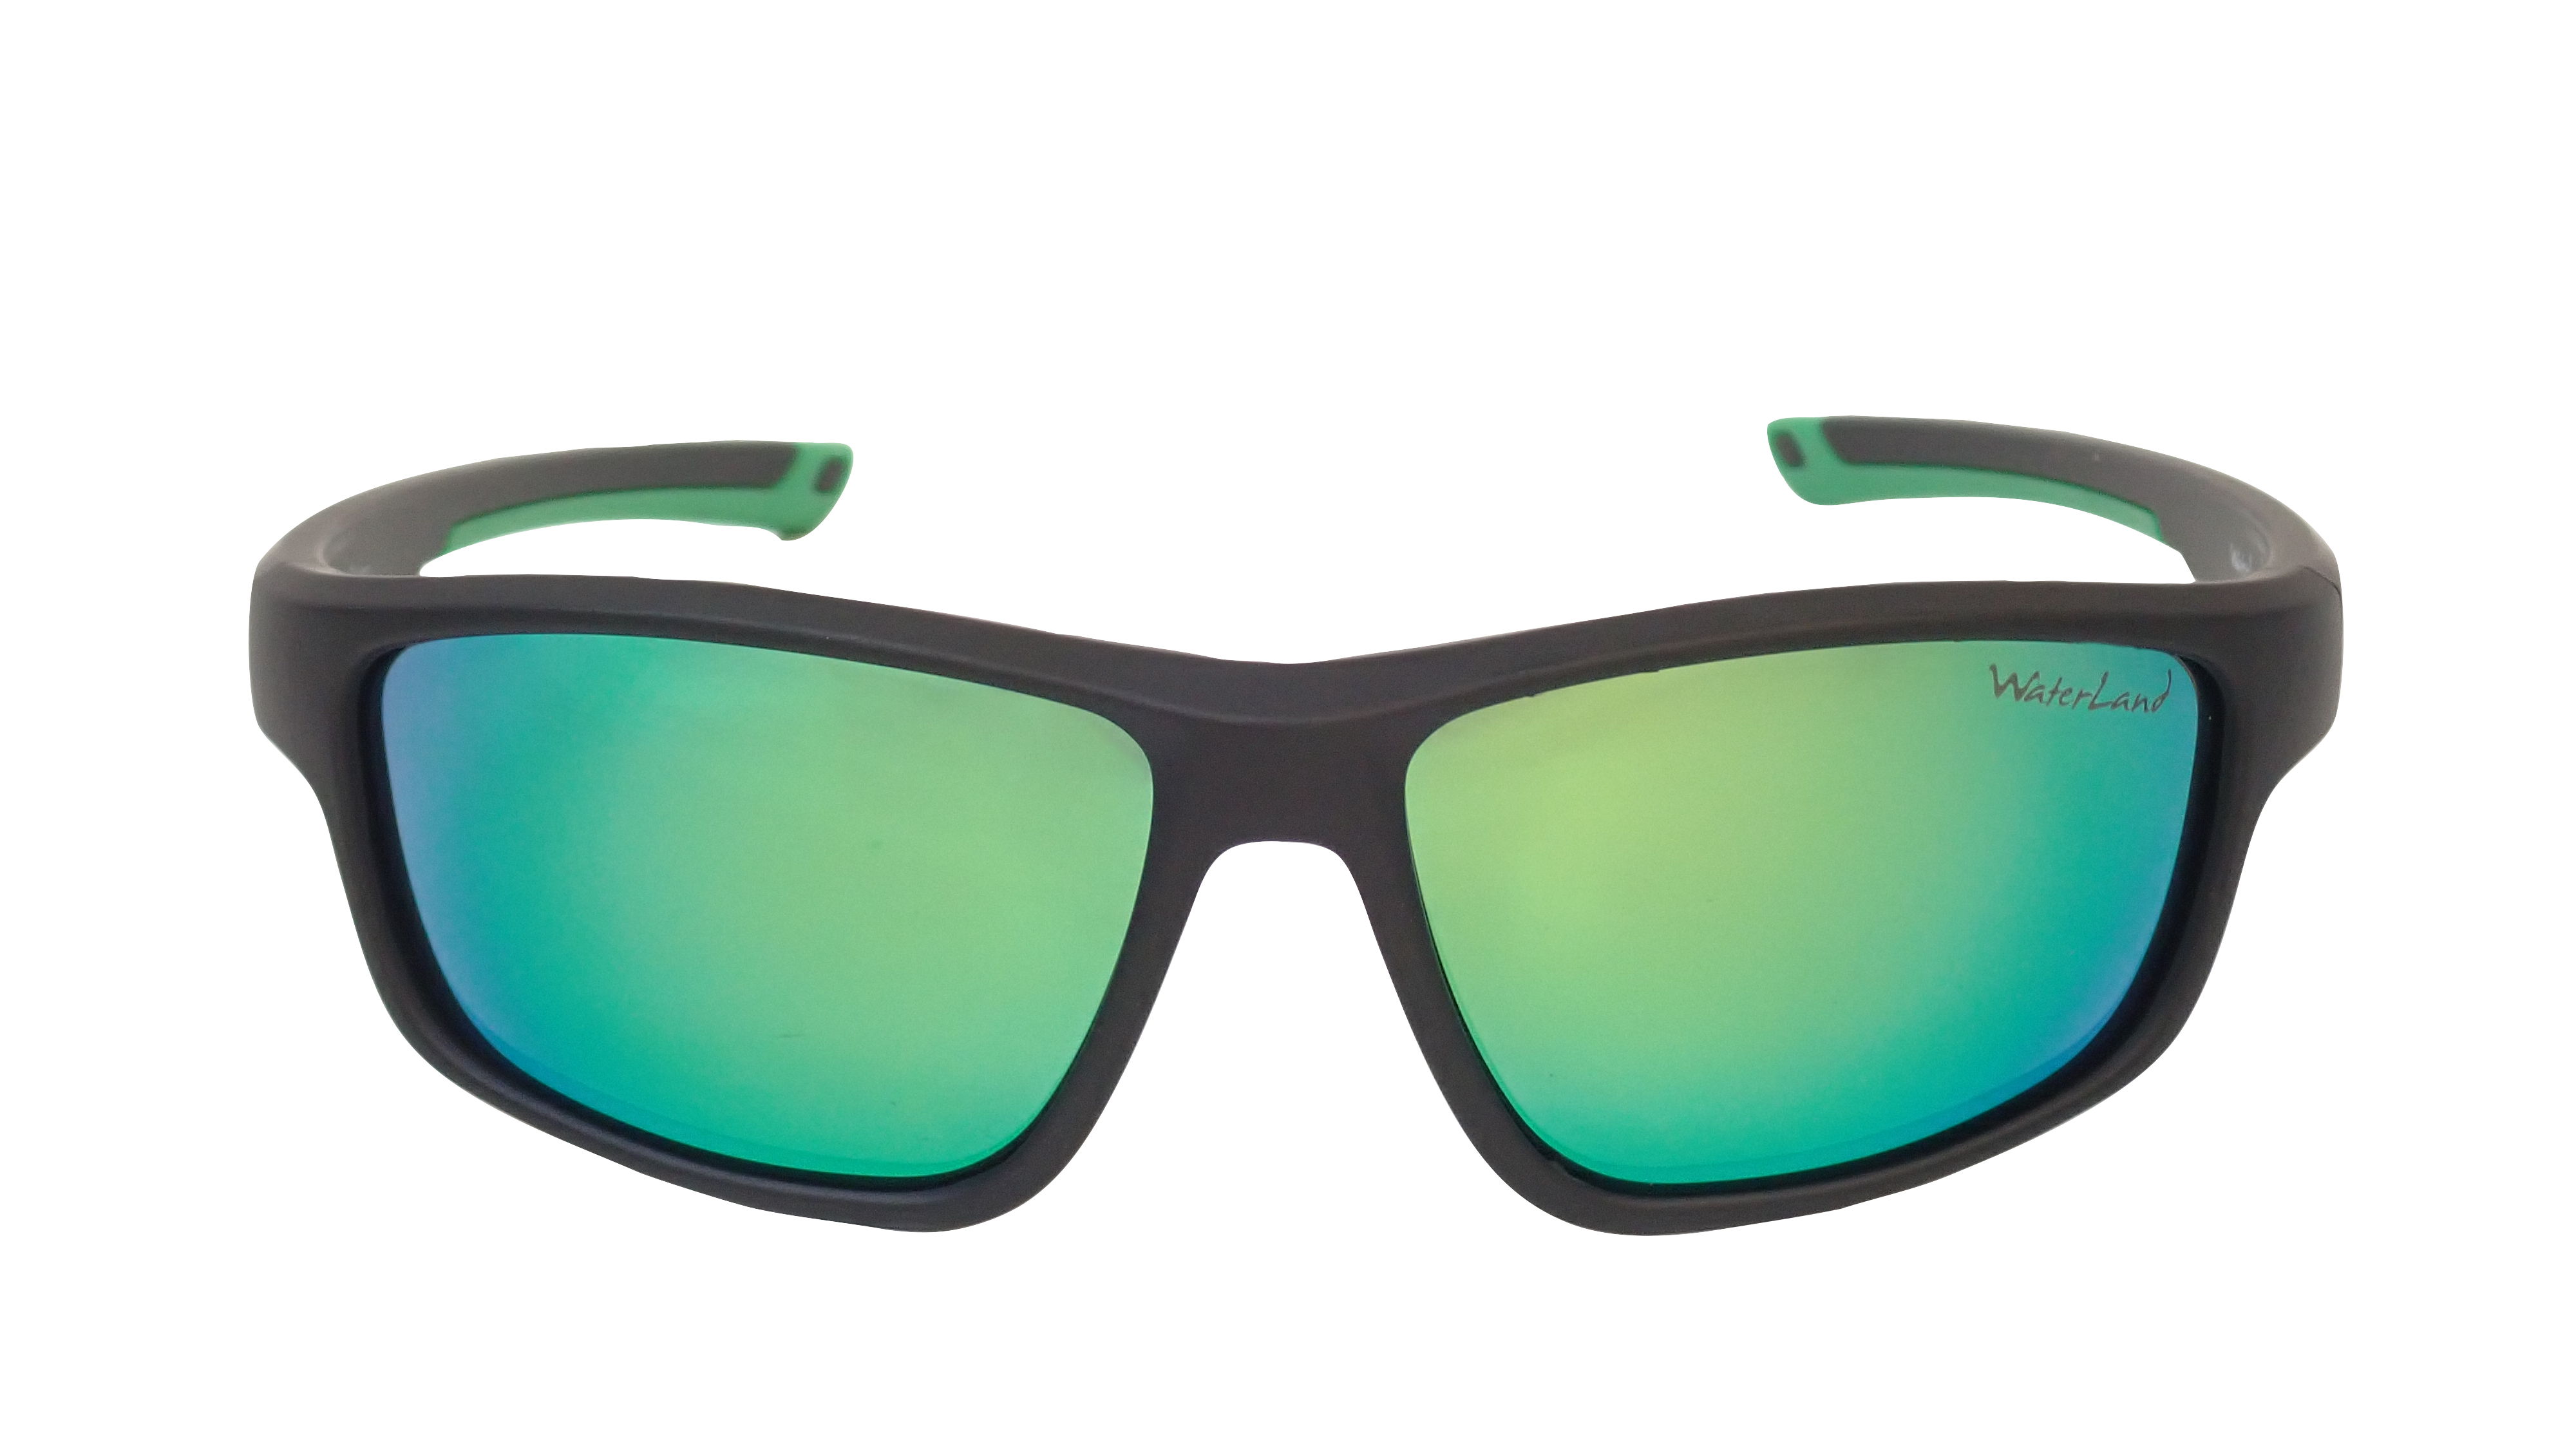 Waterland Polarized Sunglasses - KidFisher Series - Matte Black